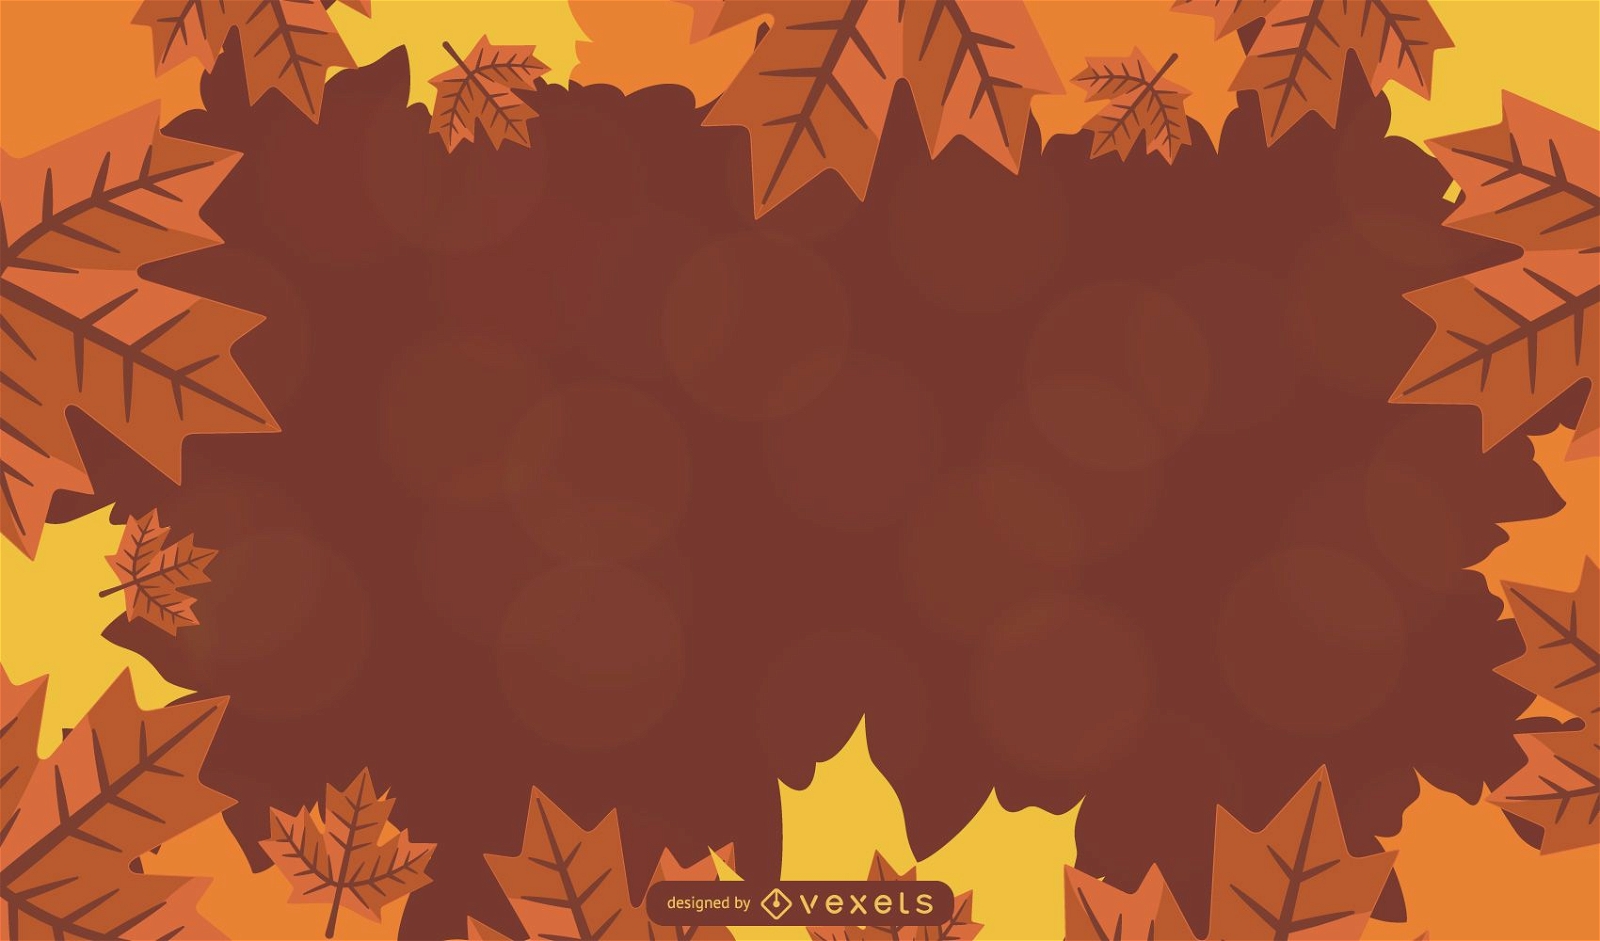 Illustrated maple leaves over blur